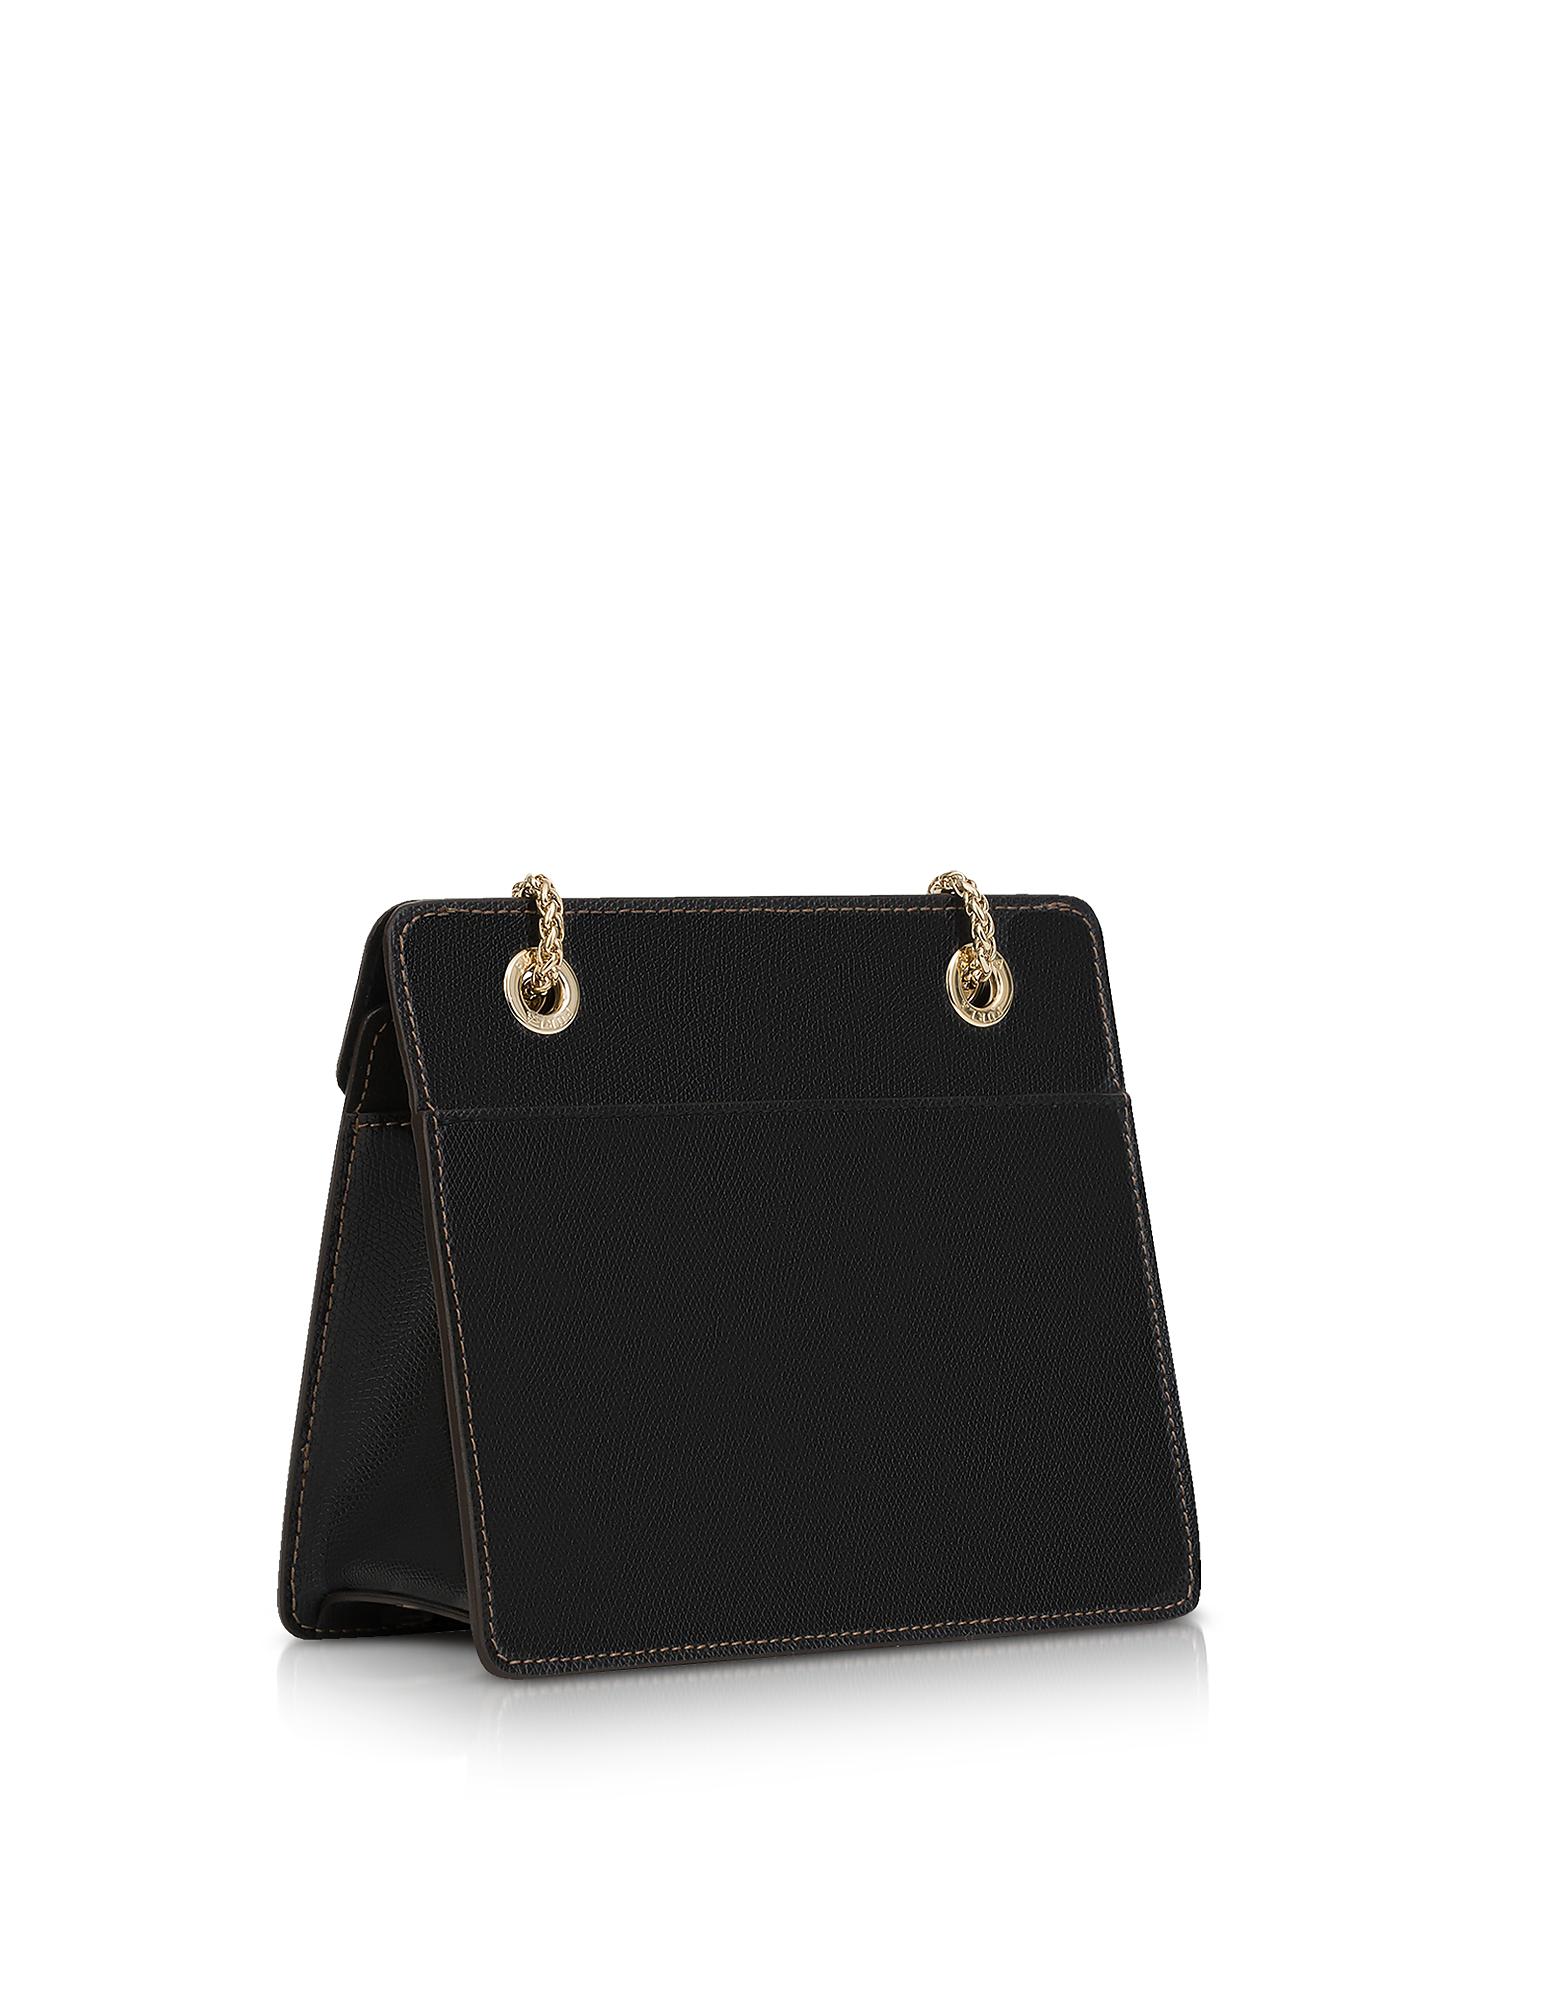 Furla Like Mini Color Block Leather Crossbody Bag W/chain Strap in Black - Lyst